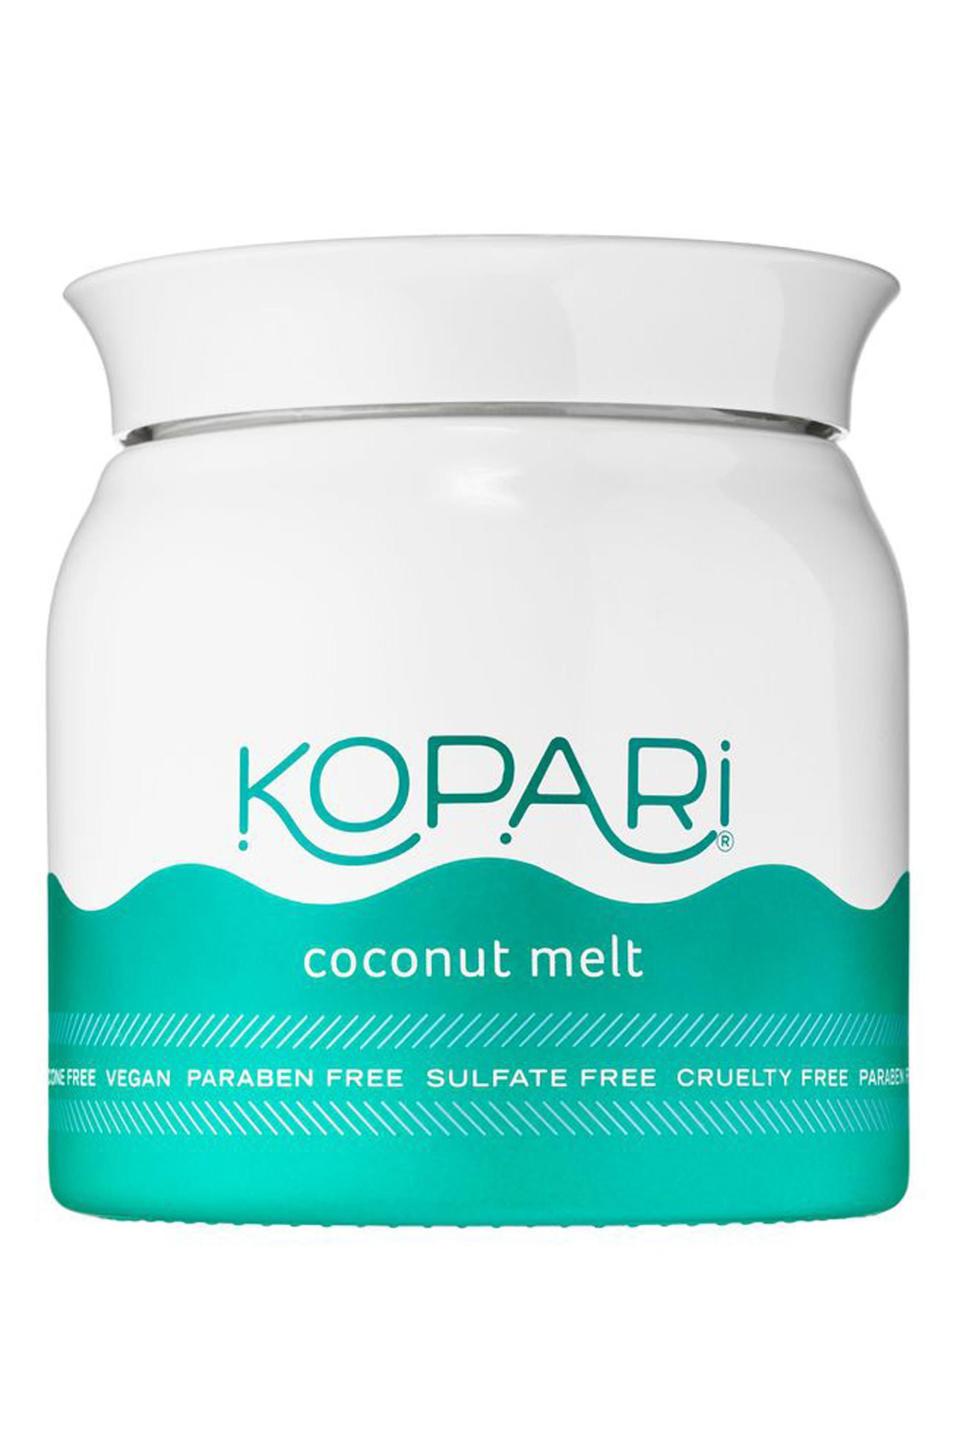 6) Kopari Organic Coconut Melt